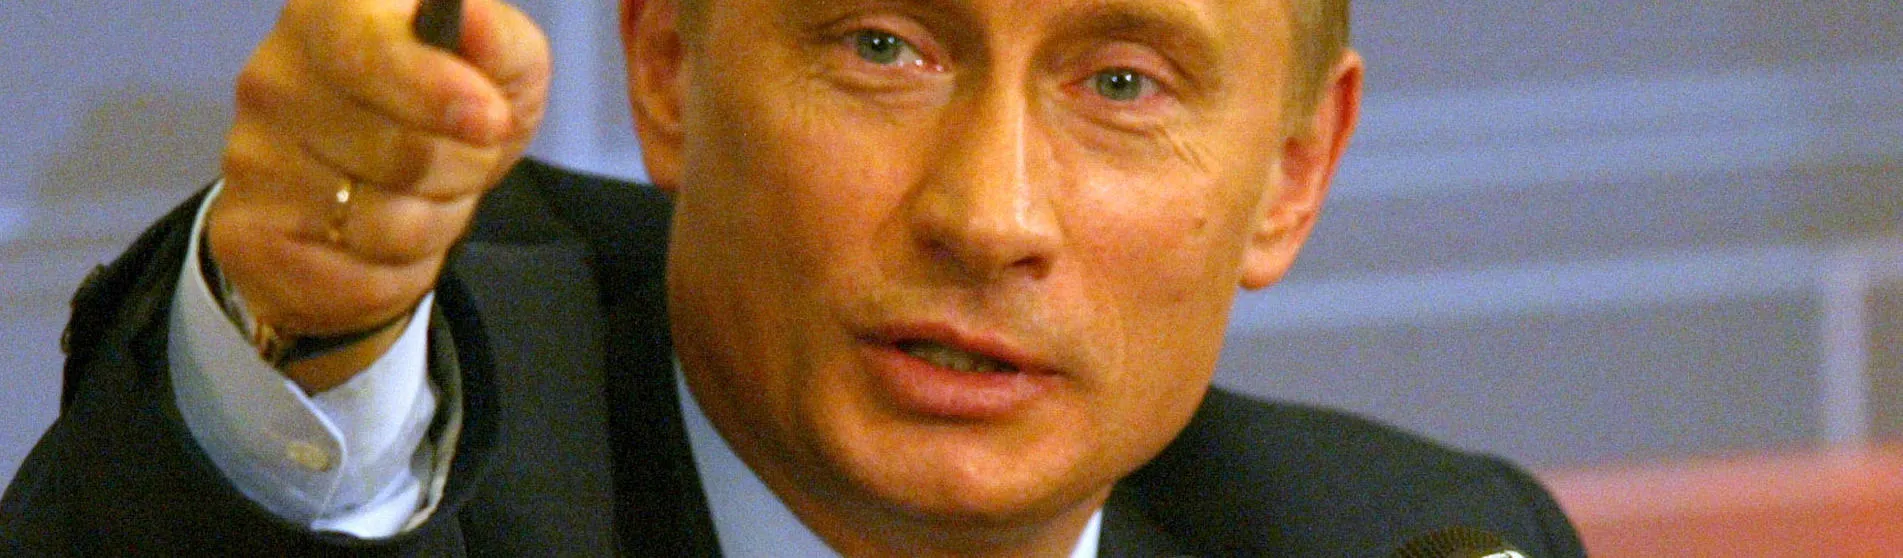 Vladimir Putin Profile